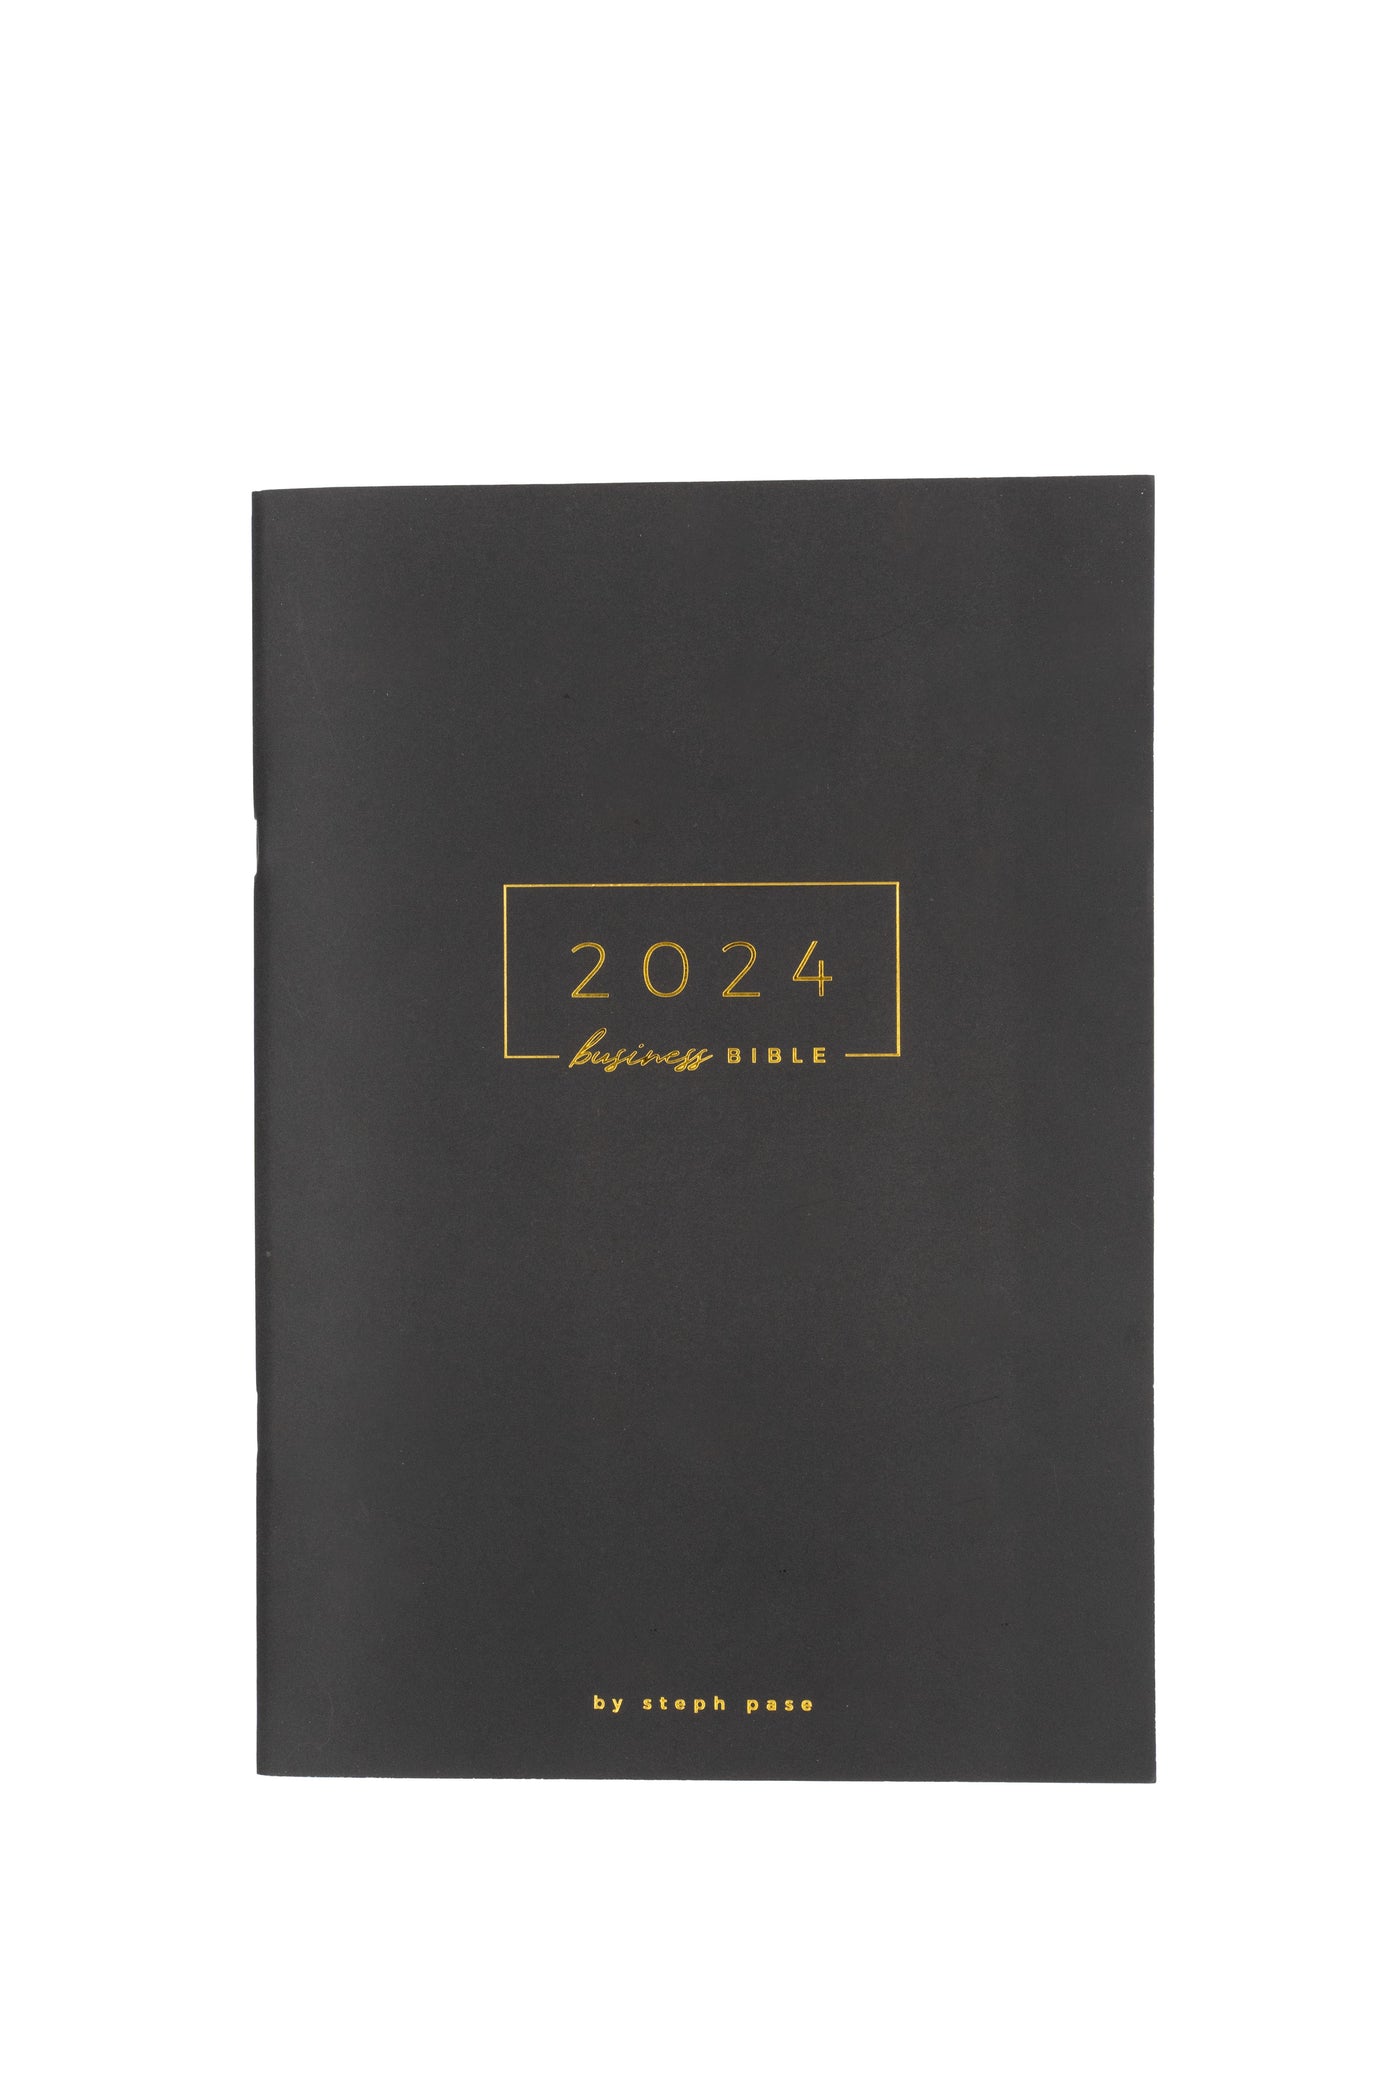 2024 Business Planner - Black